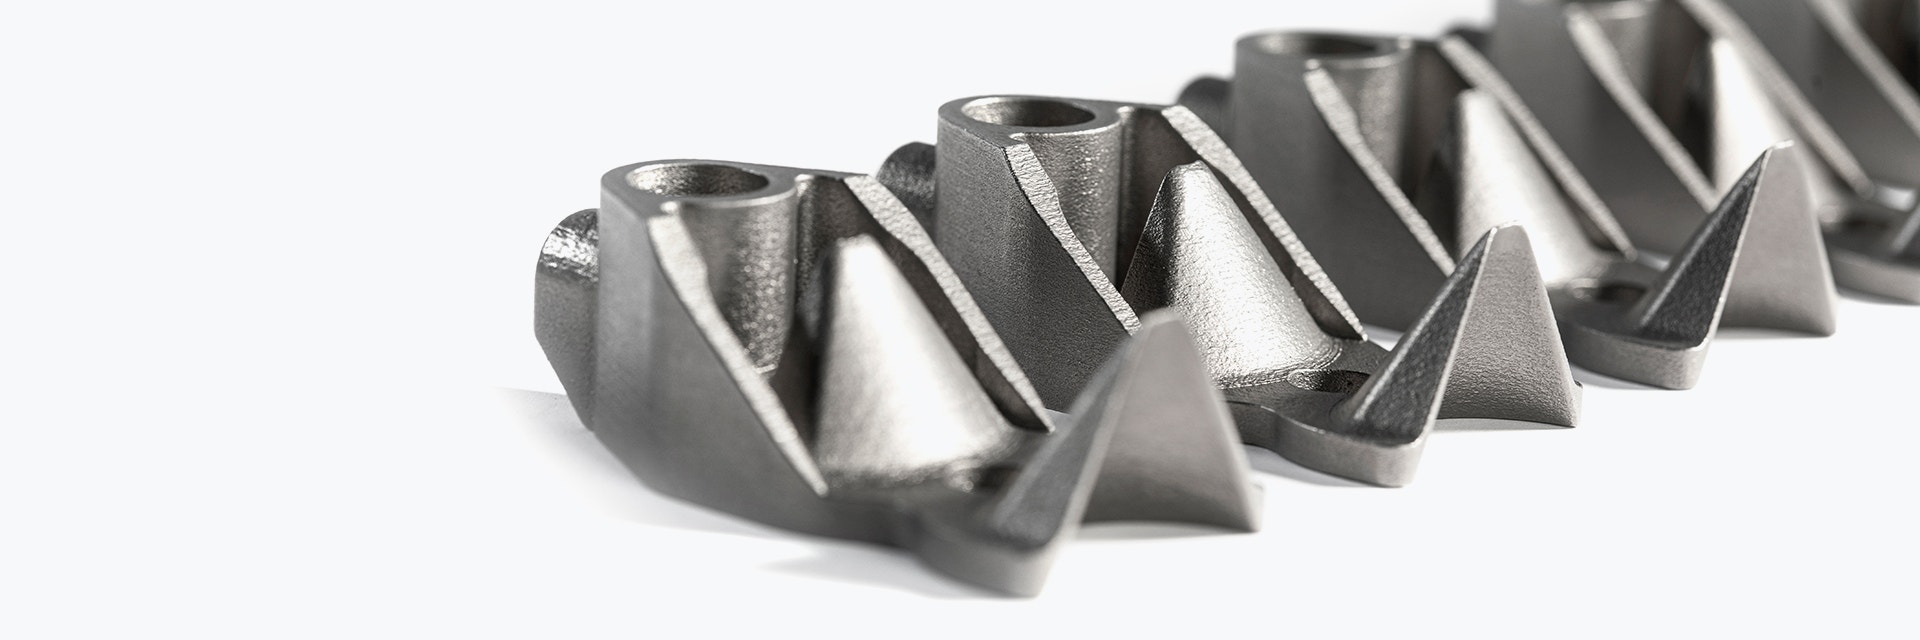 Row of metal 3D-printed parts 